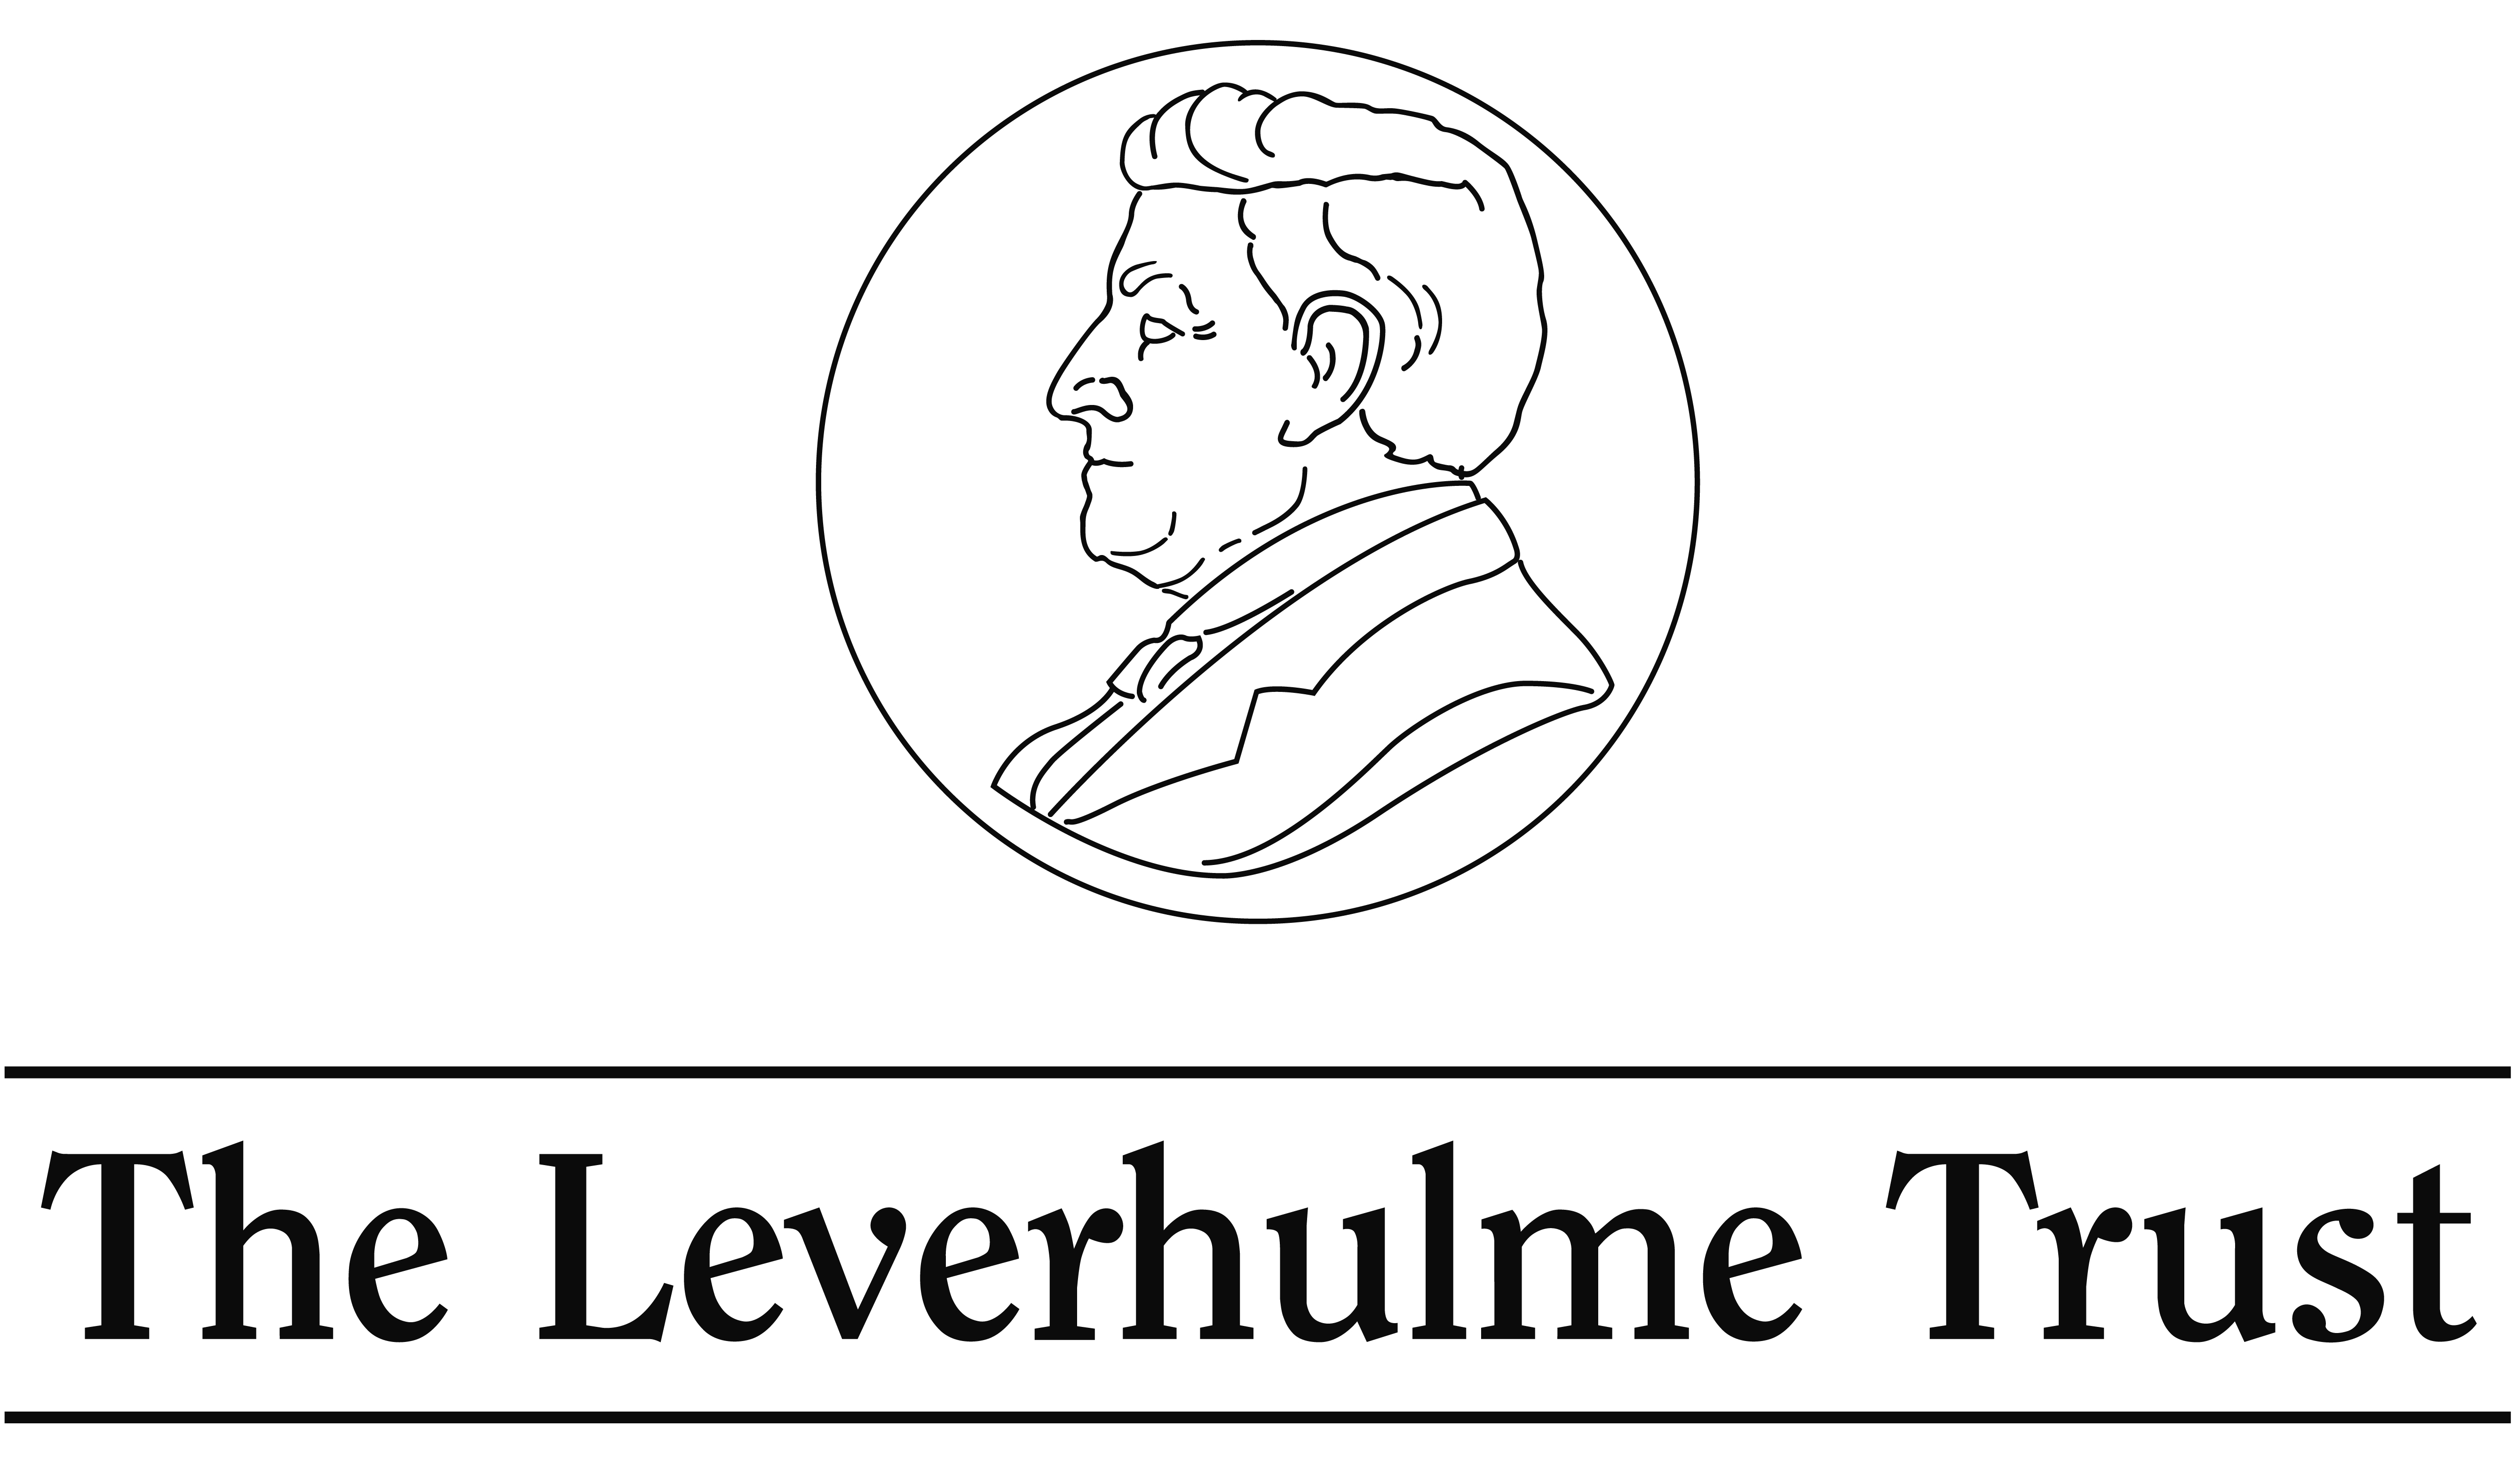 Leverhulme logo